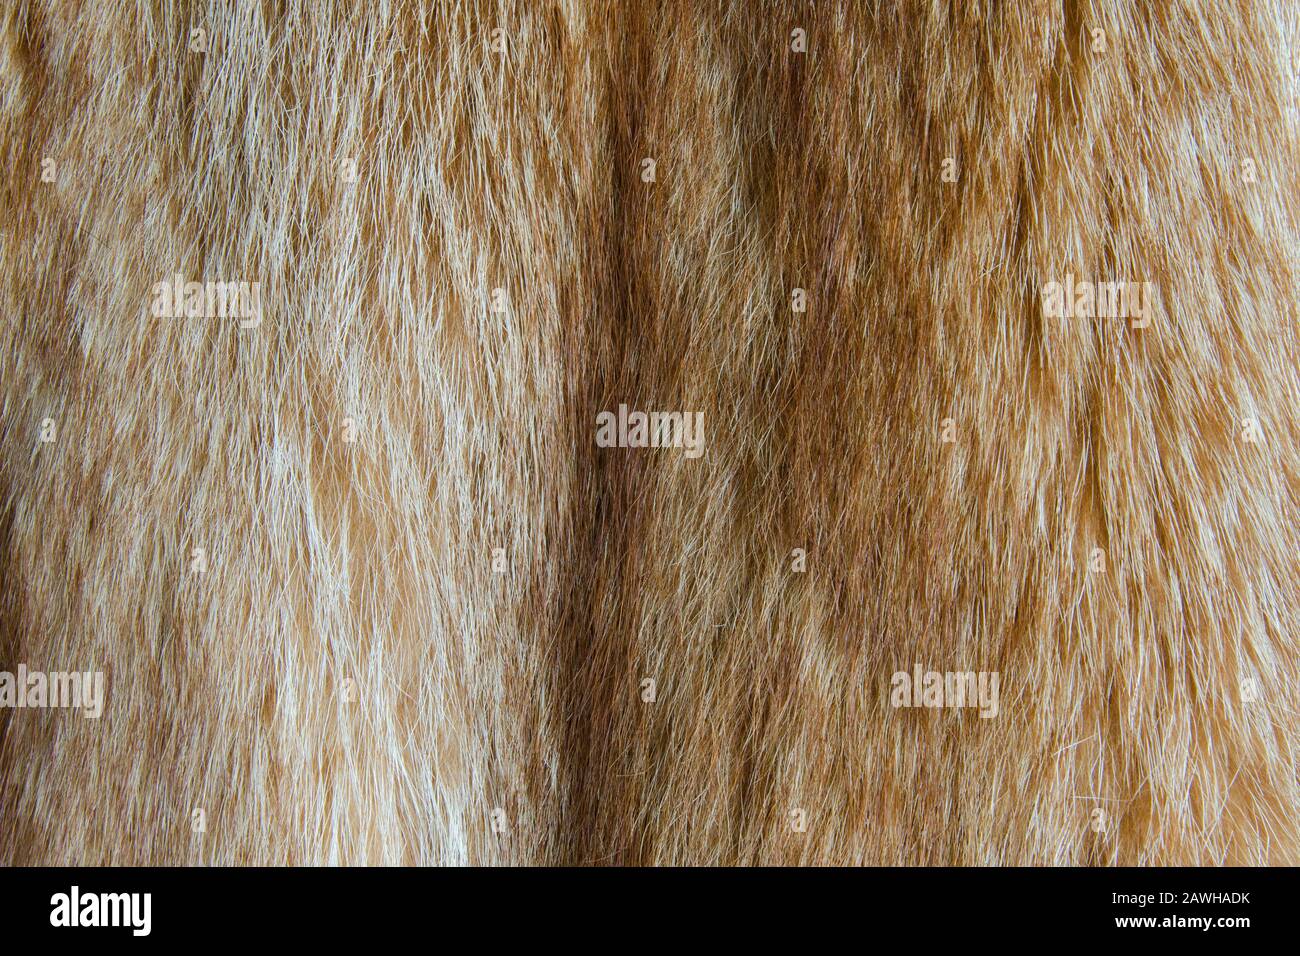 Texture of natural raccoon fur. Brown fur with long villi. Stock Photo